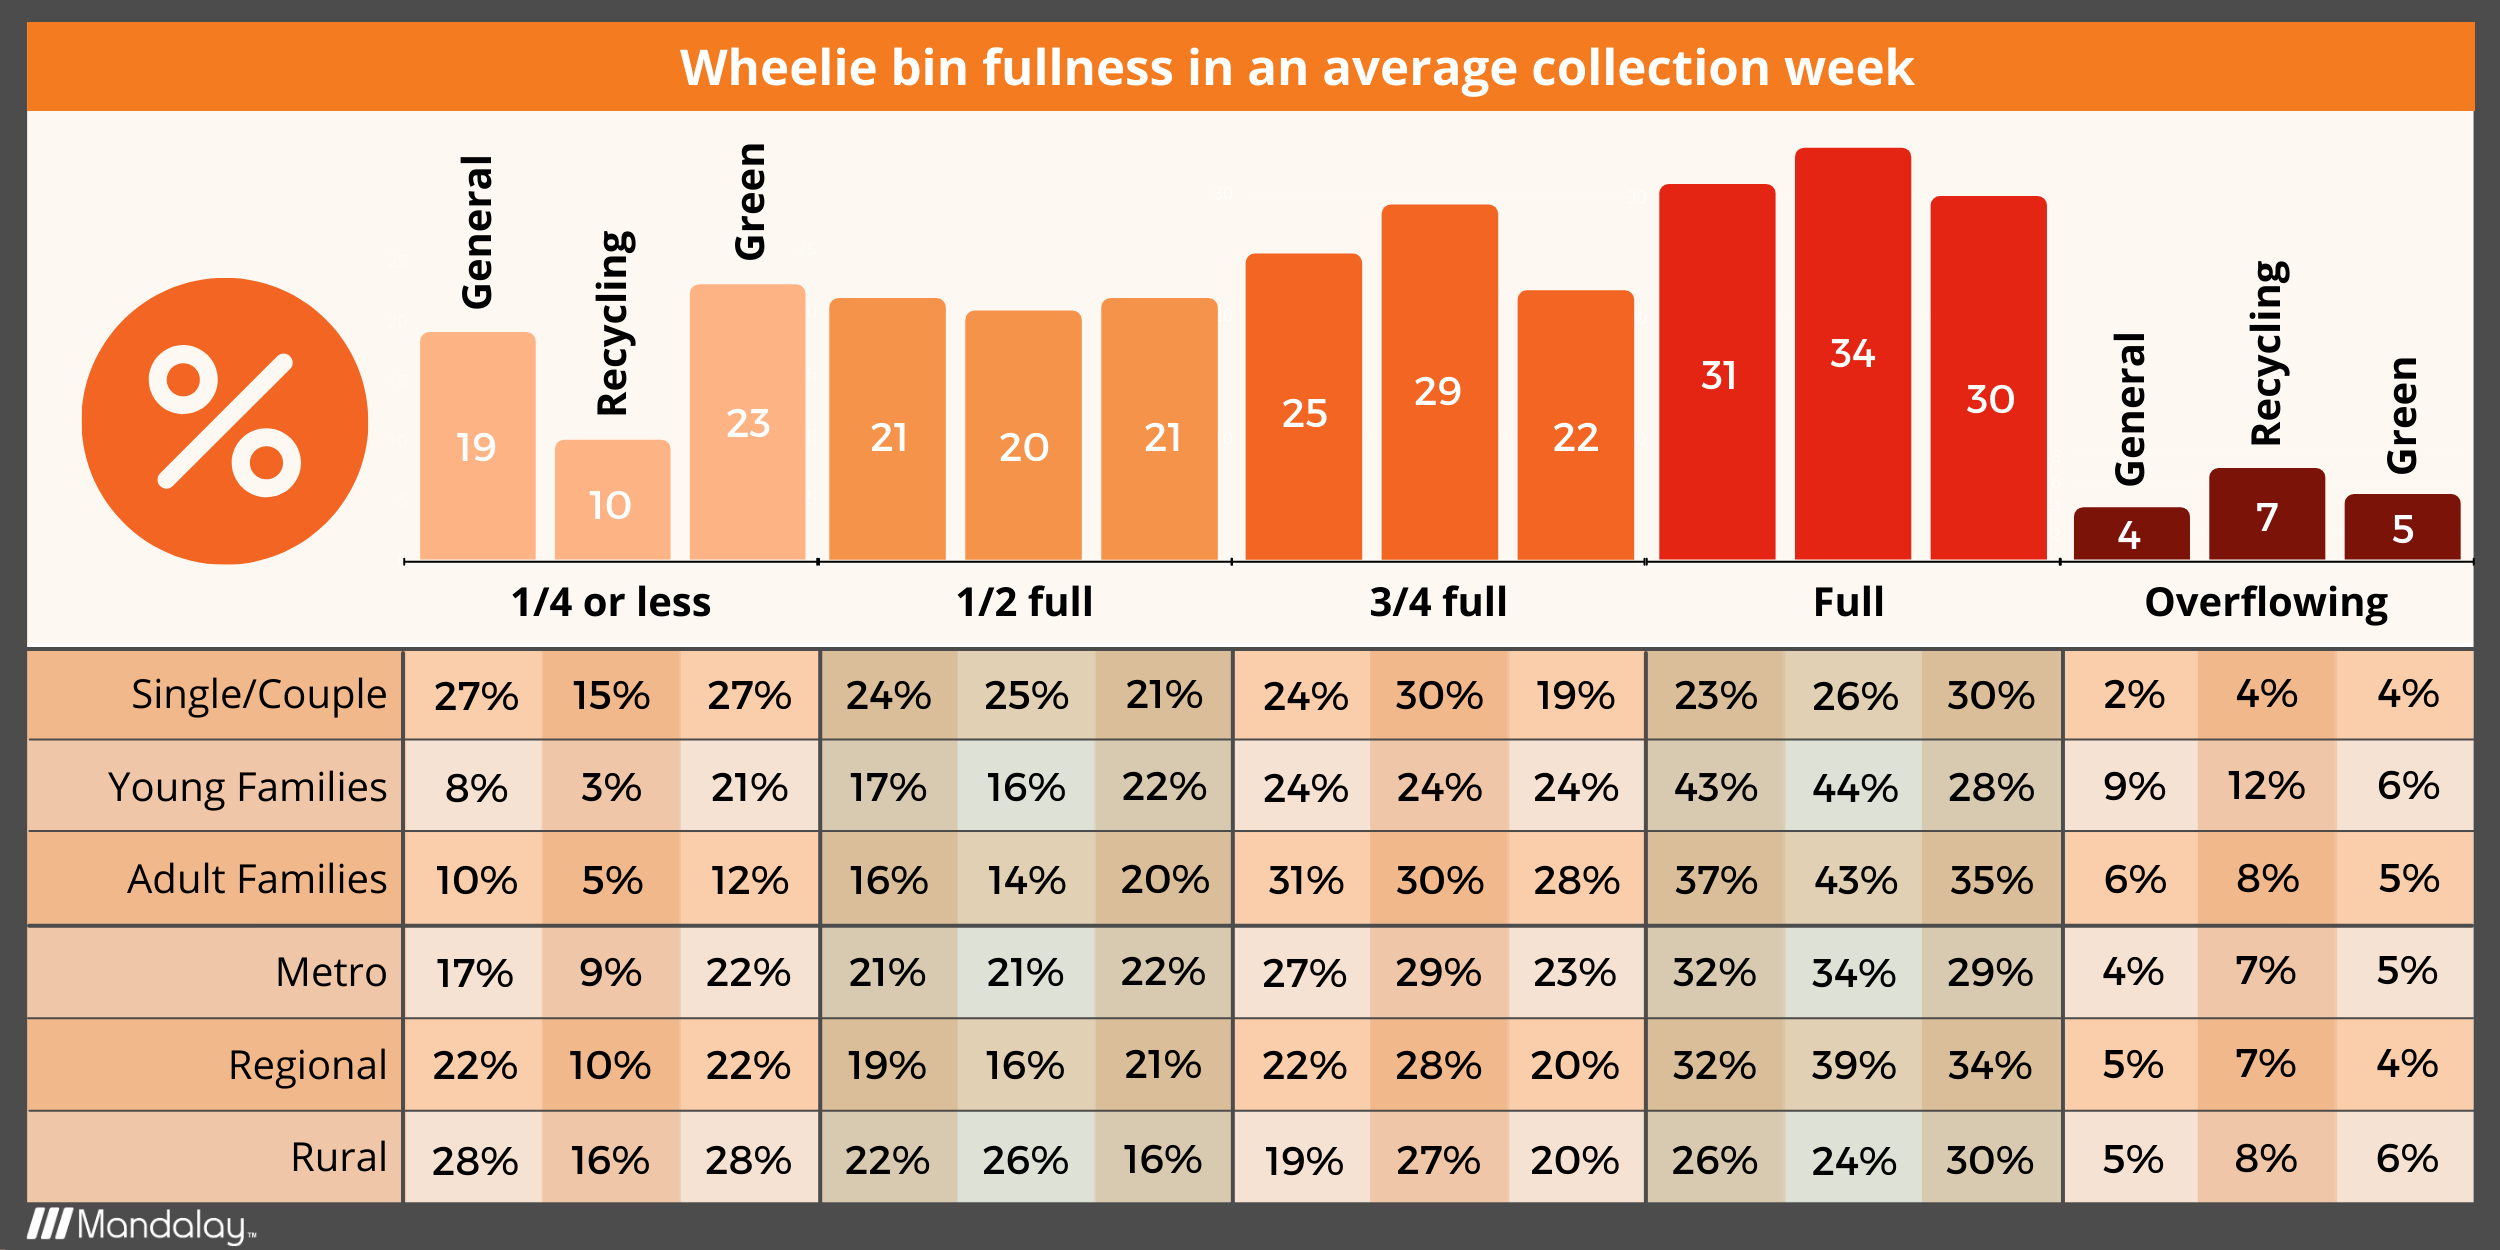 Wheelie bin fullness in an average collection week